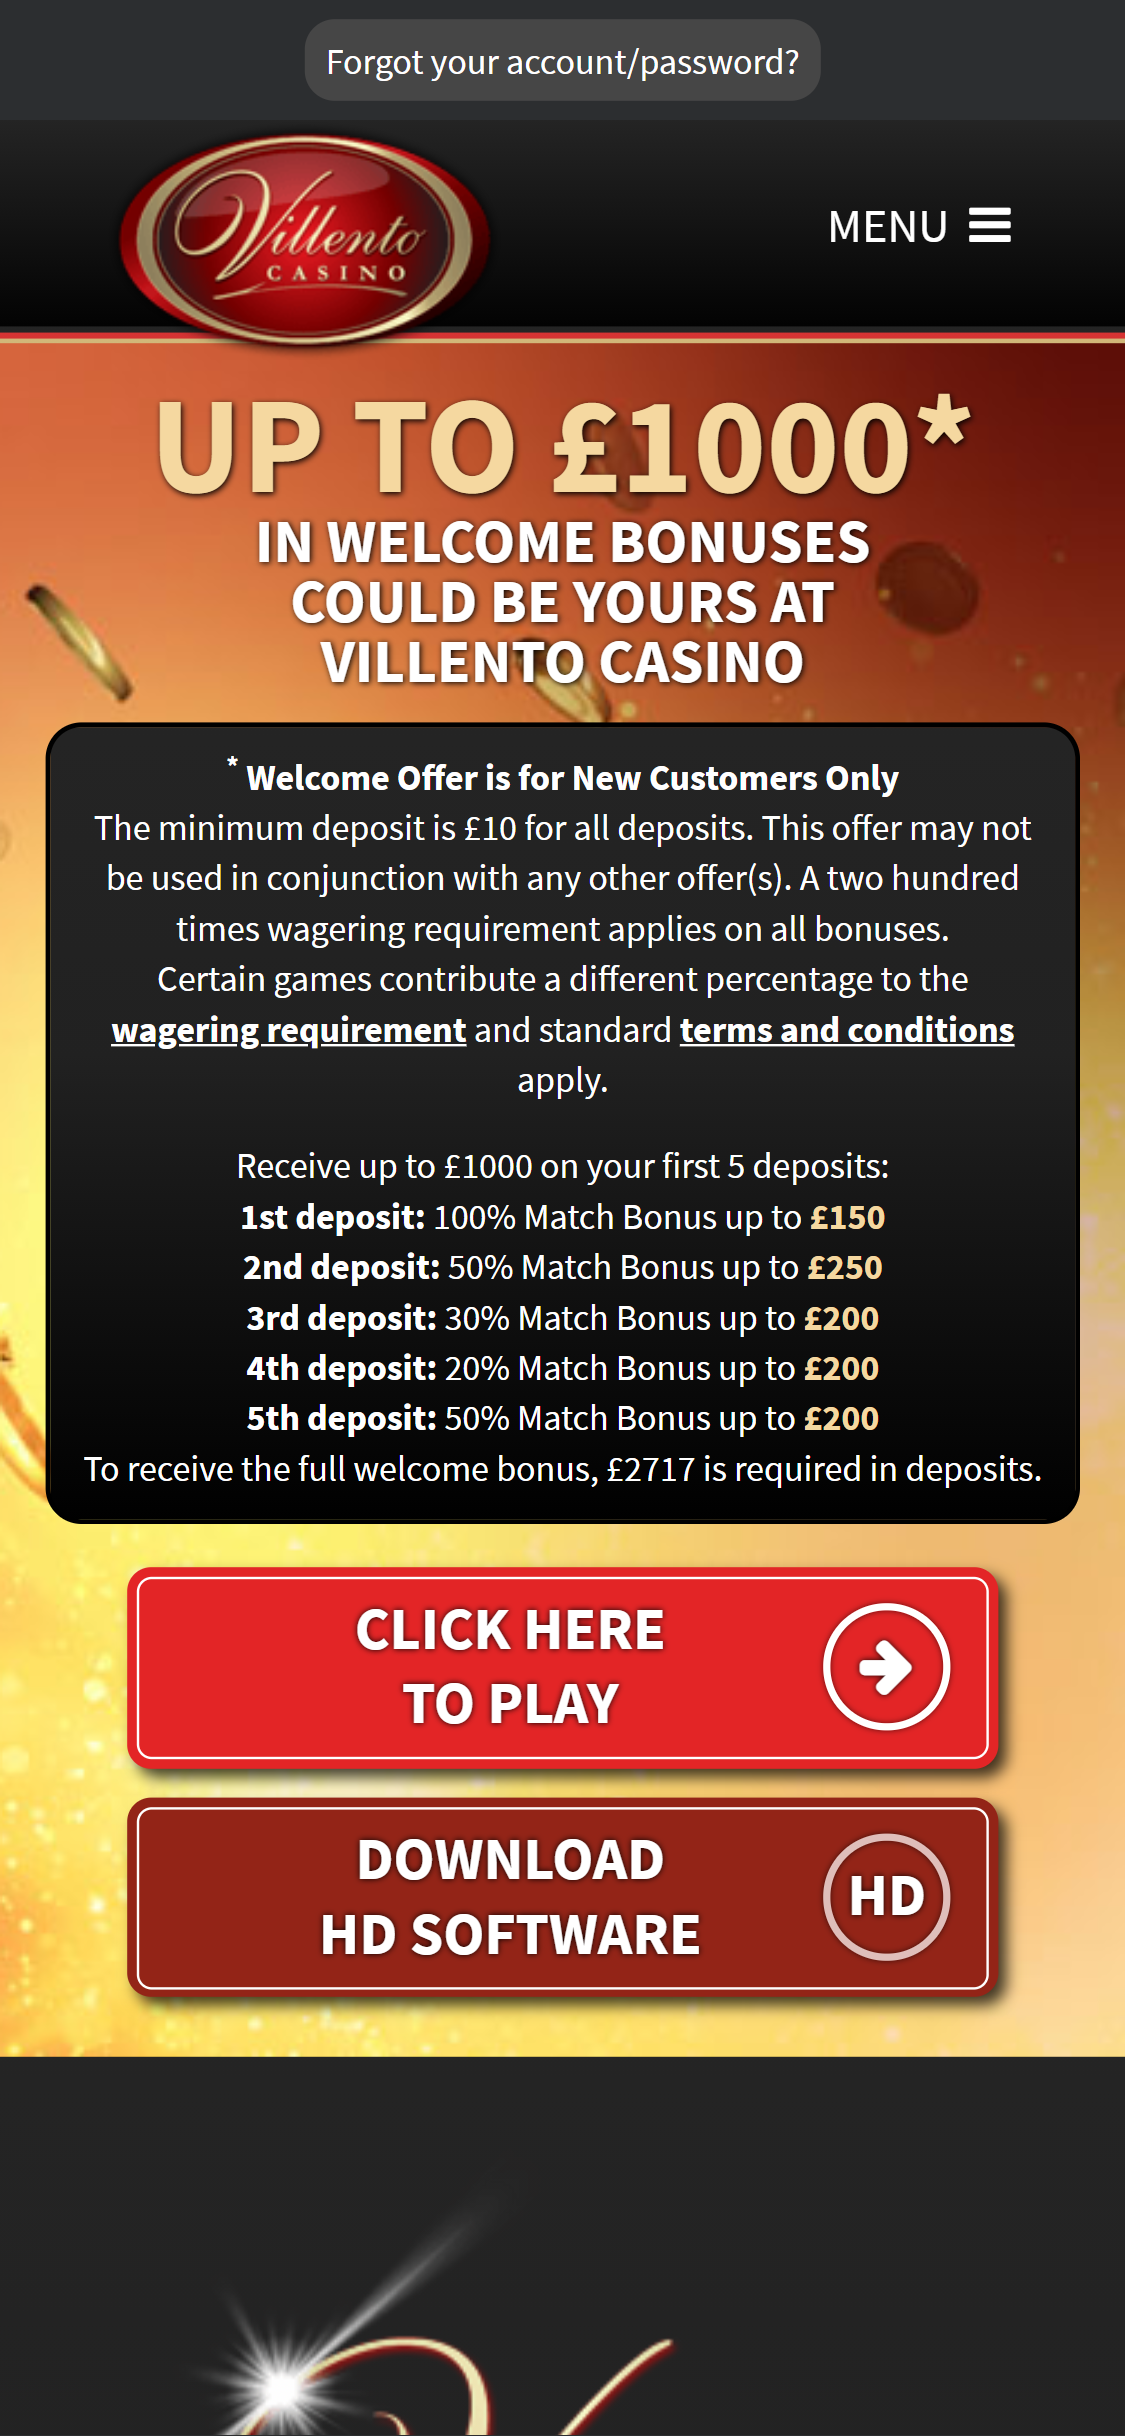 Villento Casino Mobile Review